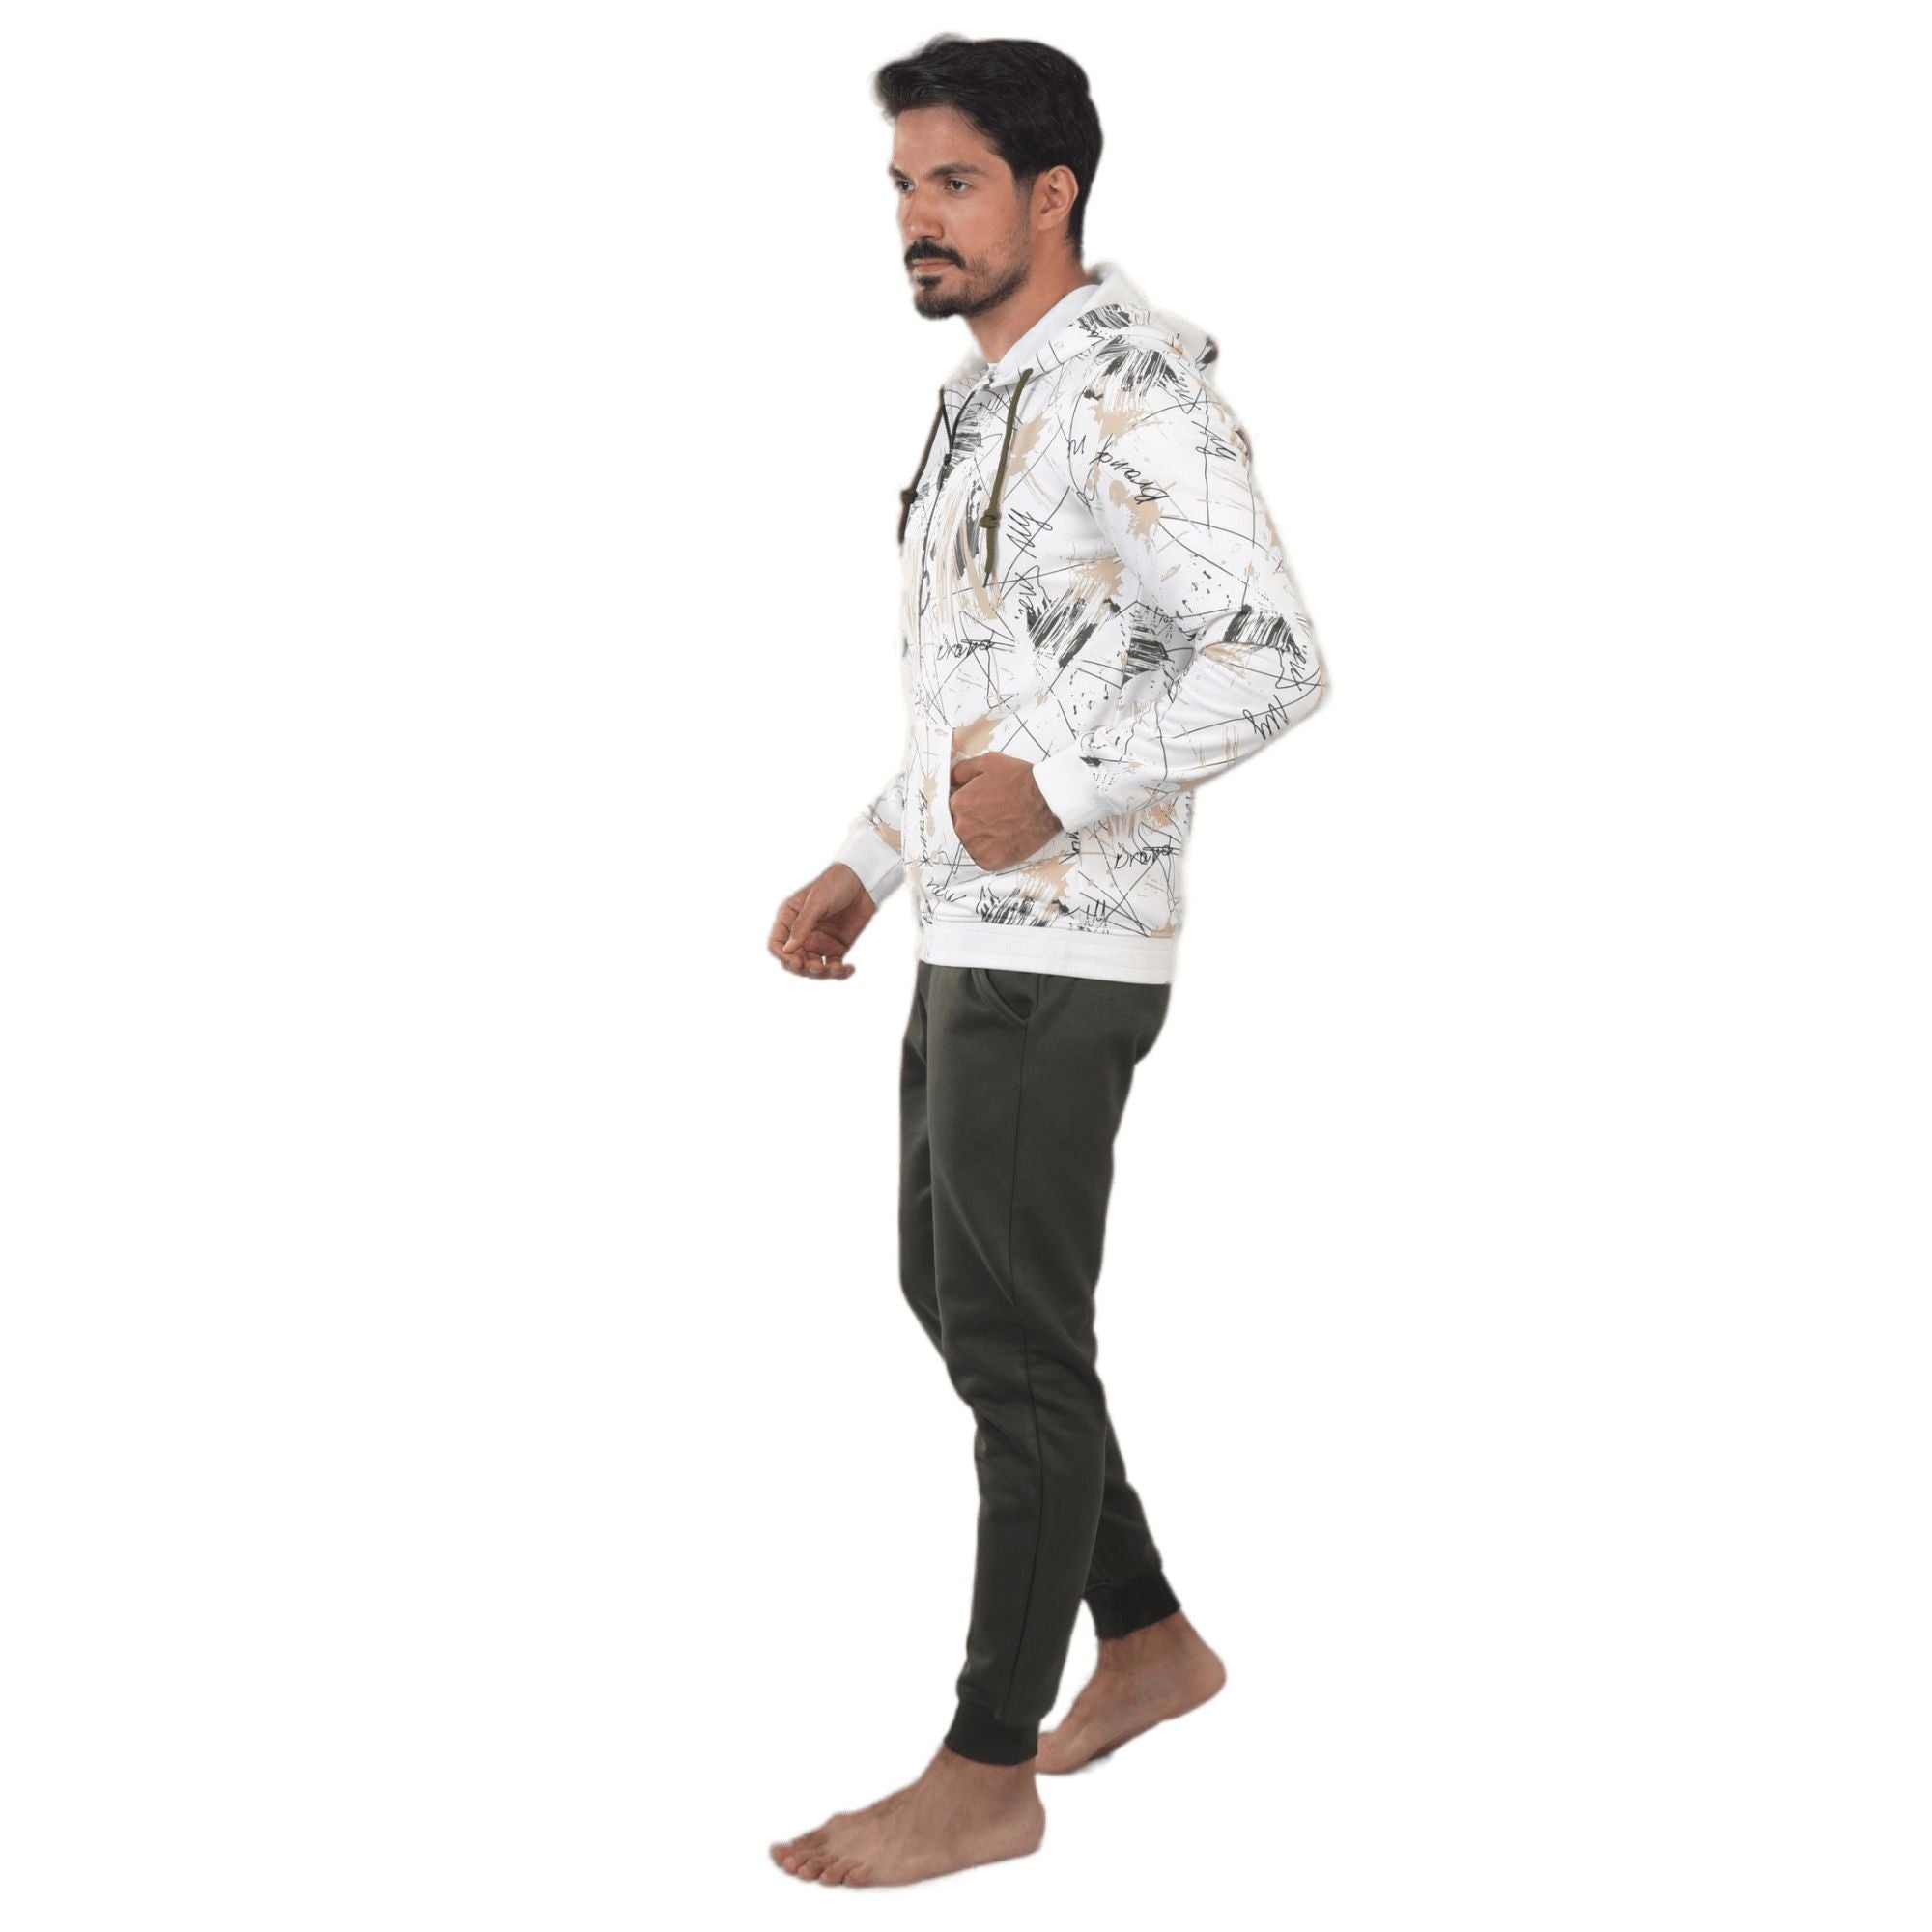 Men's Digitally Printed Winter Pajama Set - Off-white Hoodie and Green Sweatpants.